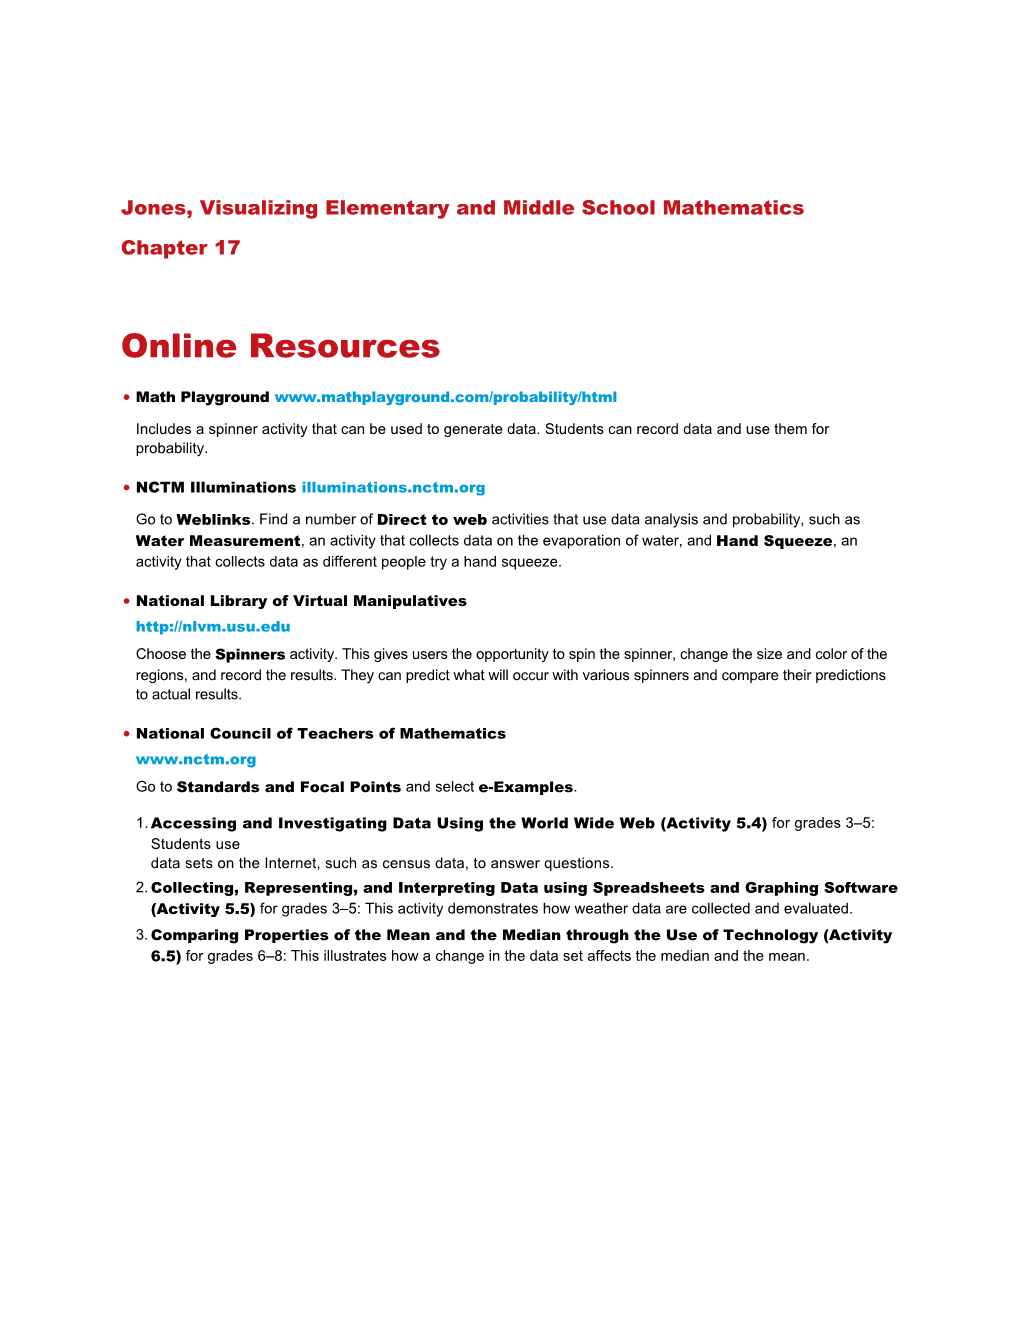 Jones, Visualizing Elementary and Middle School Mathematics Chapter 17